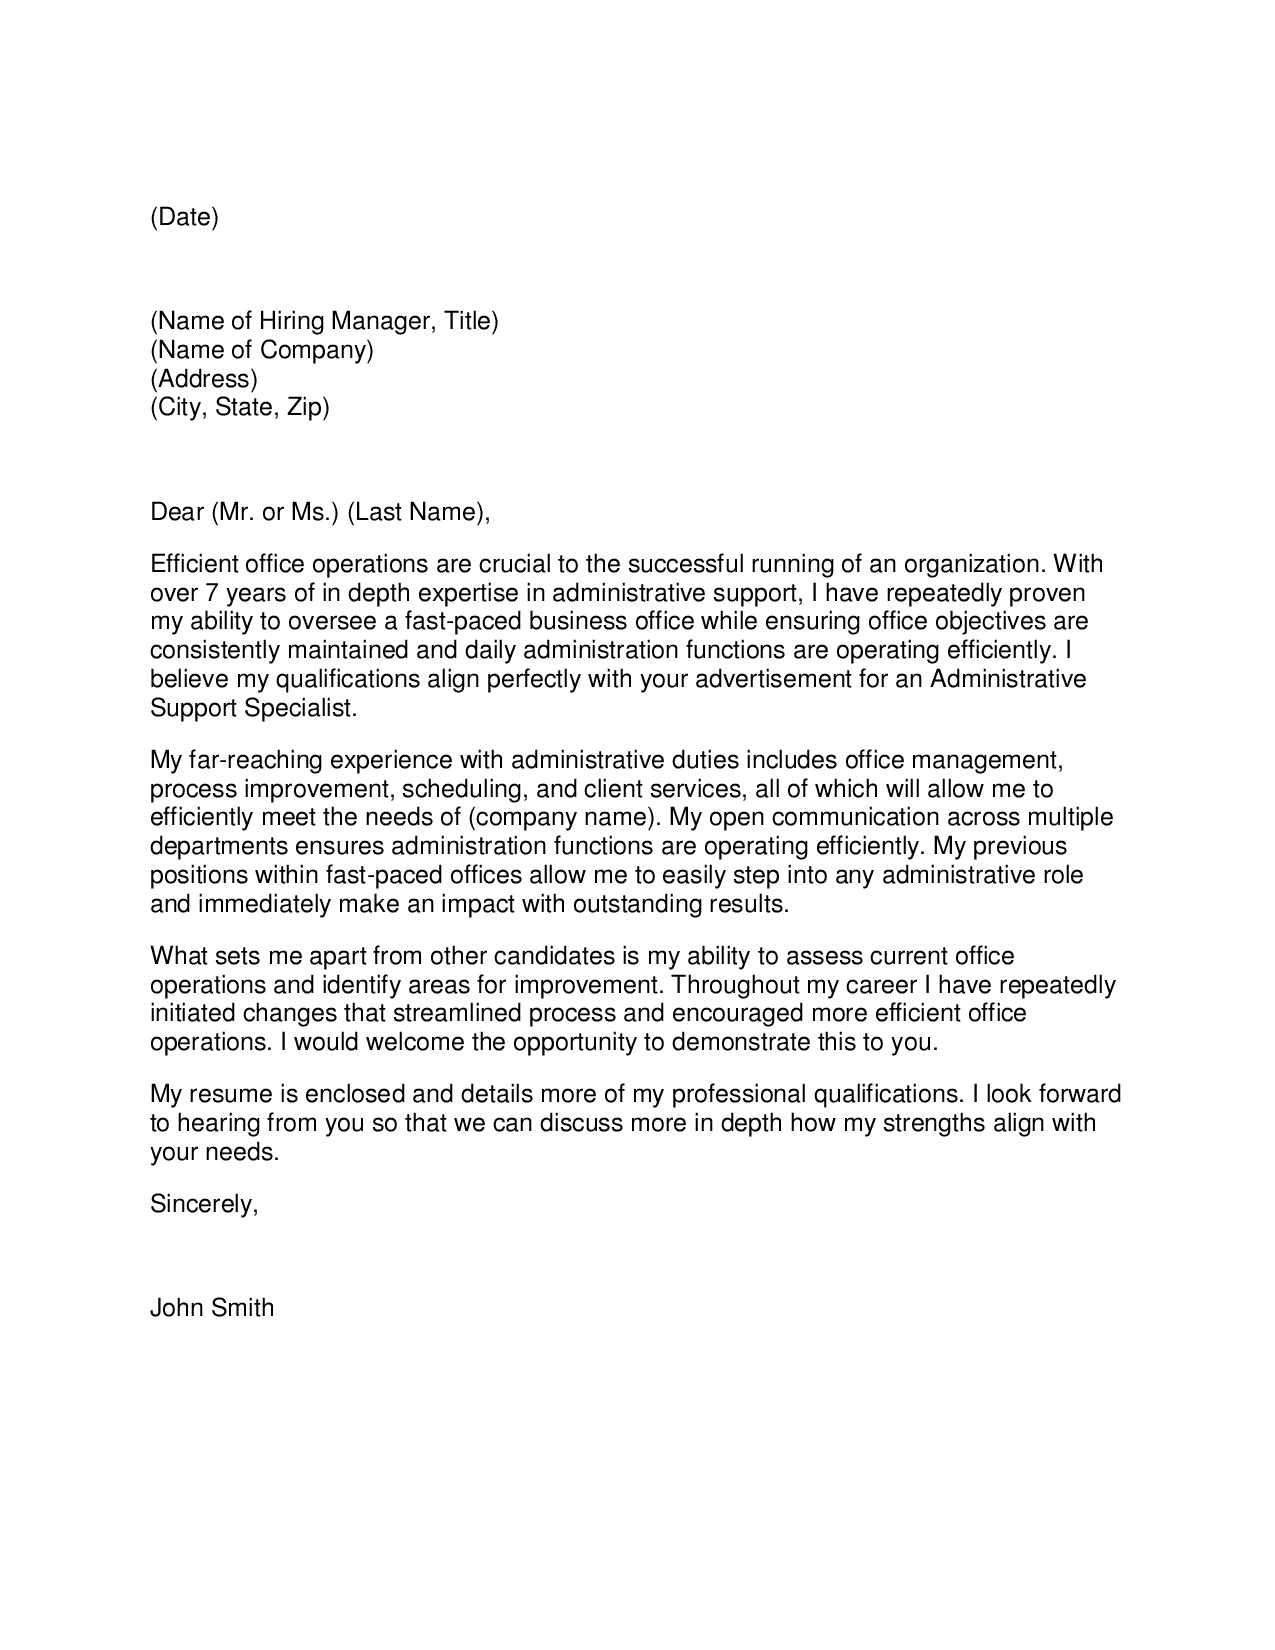 admin support officer cover letter